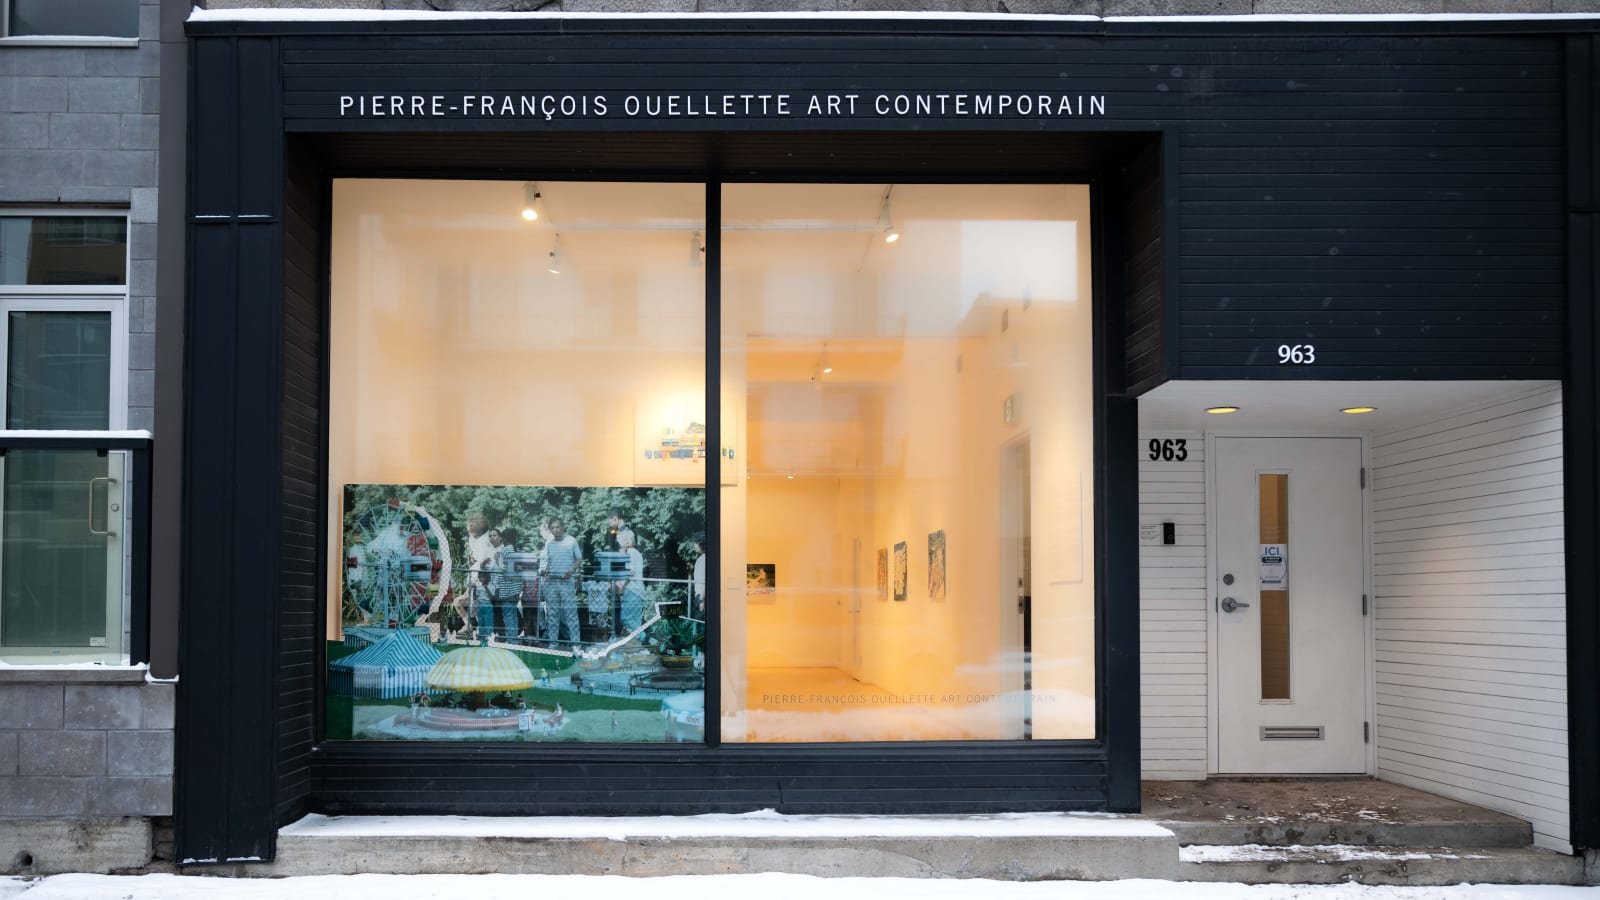  Installation view from Pierre-François Ouellette Art Contemporain, Montreal. Photo by Jason Perreault. 